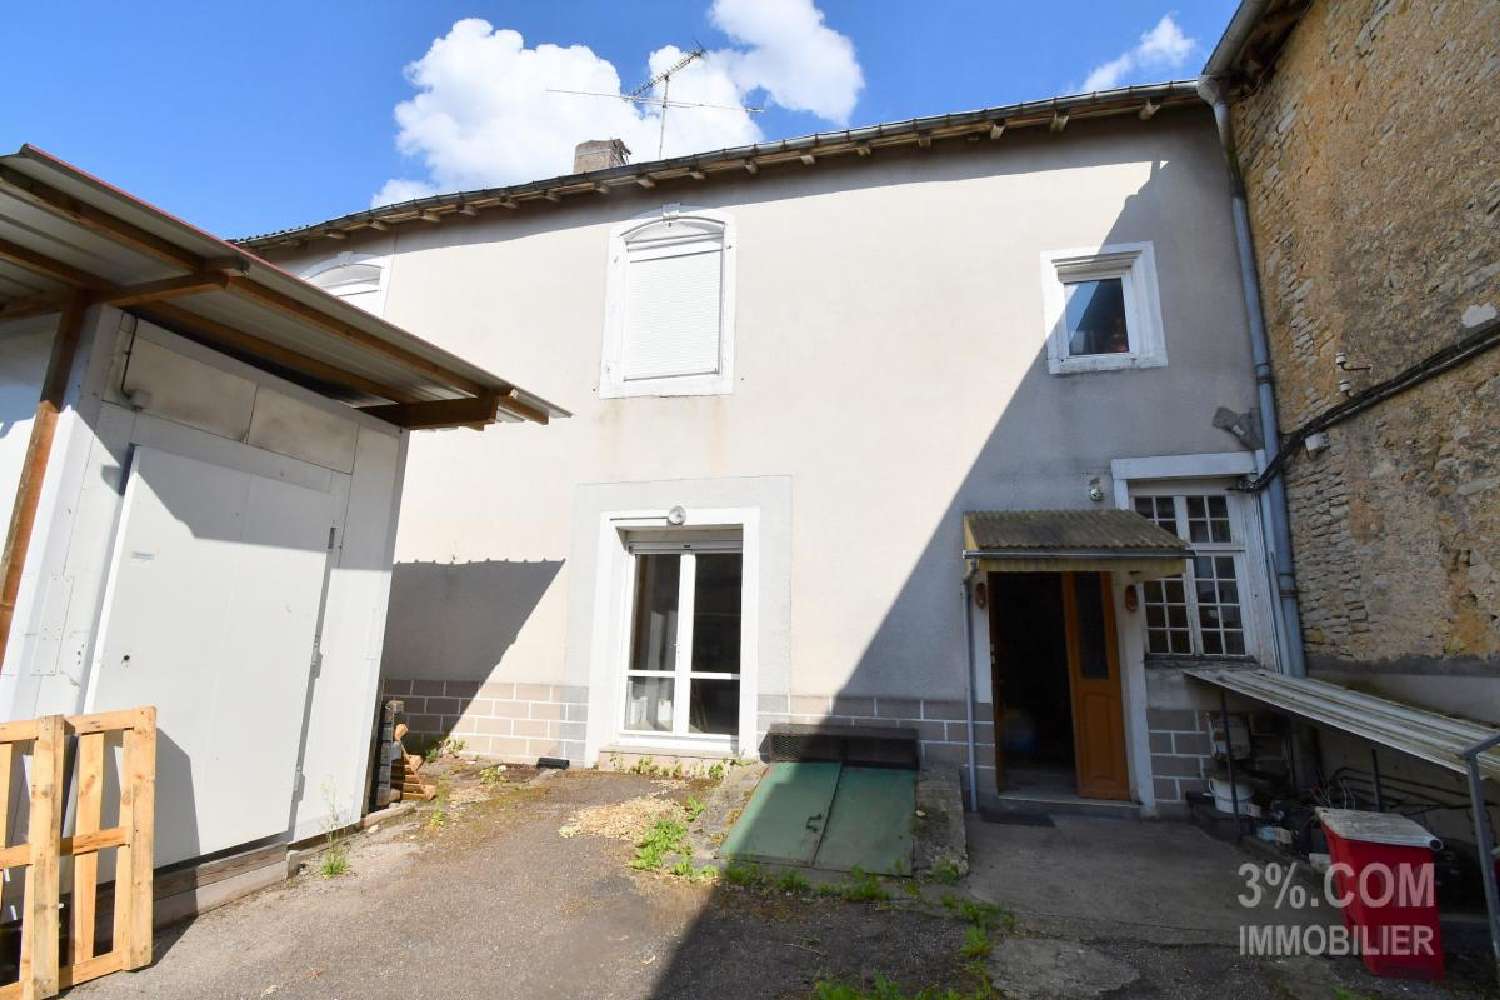  for sale house Colombey-les-Belles Meurthe-et-Moselle 2